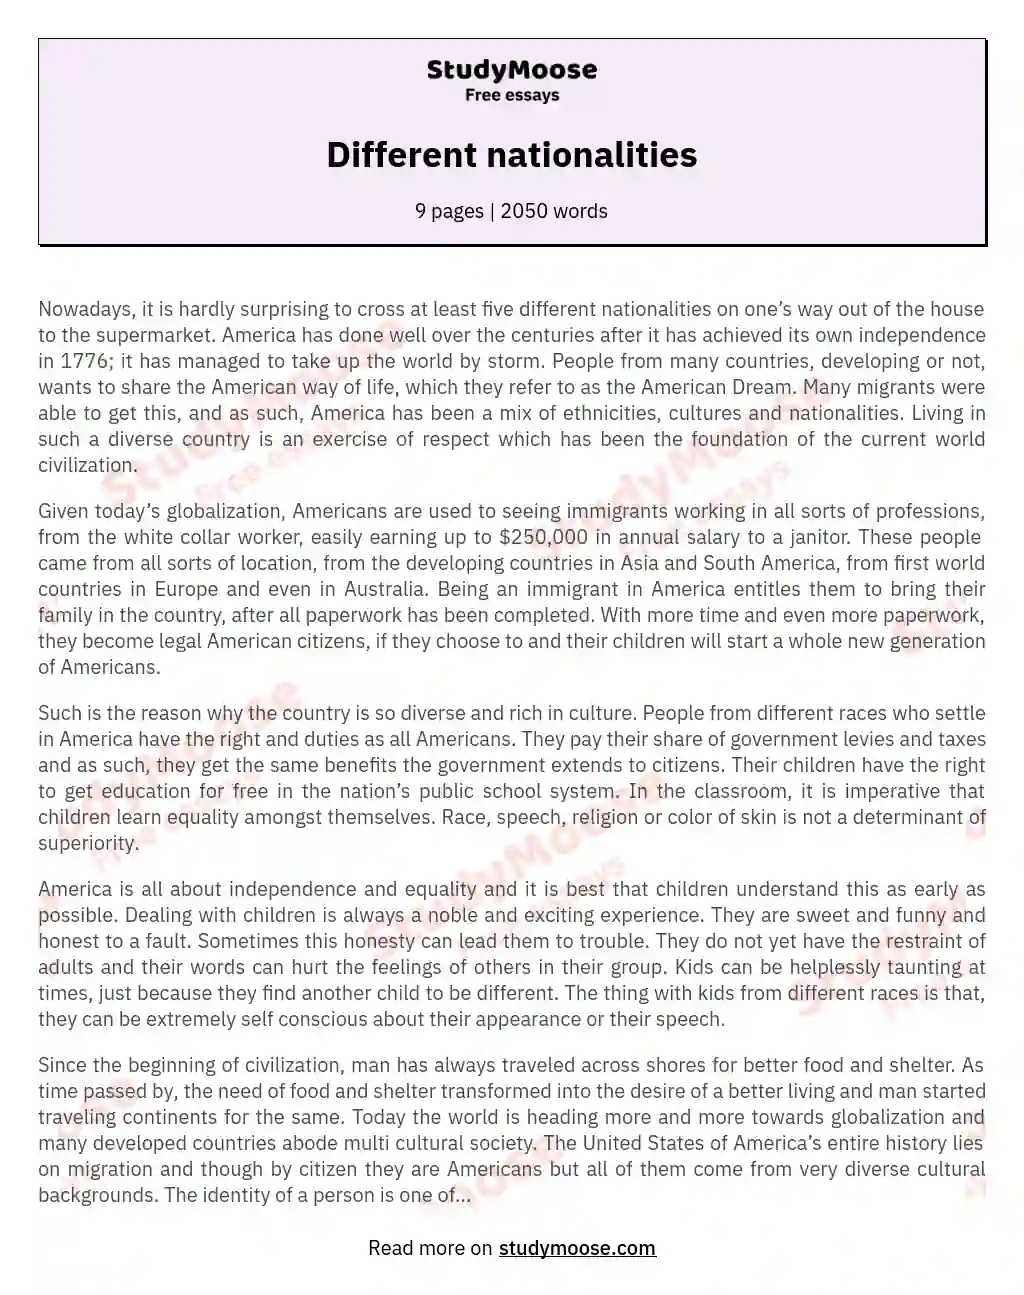 Different nationalities essay